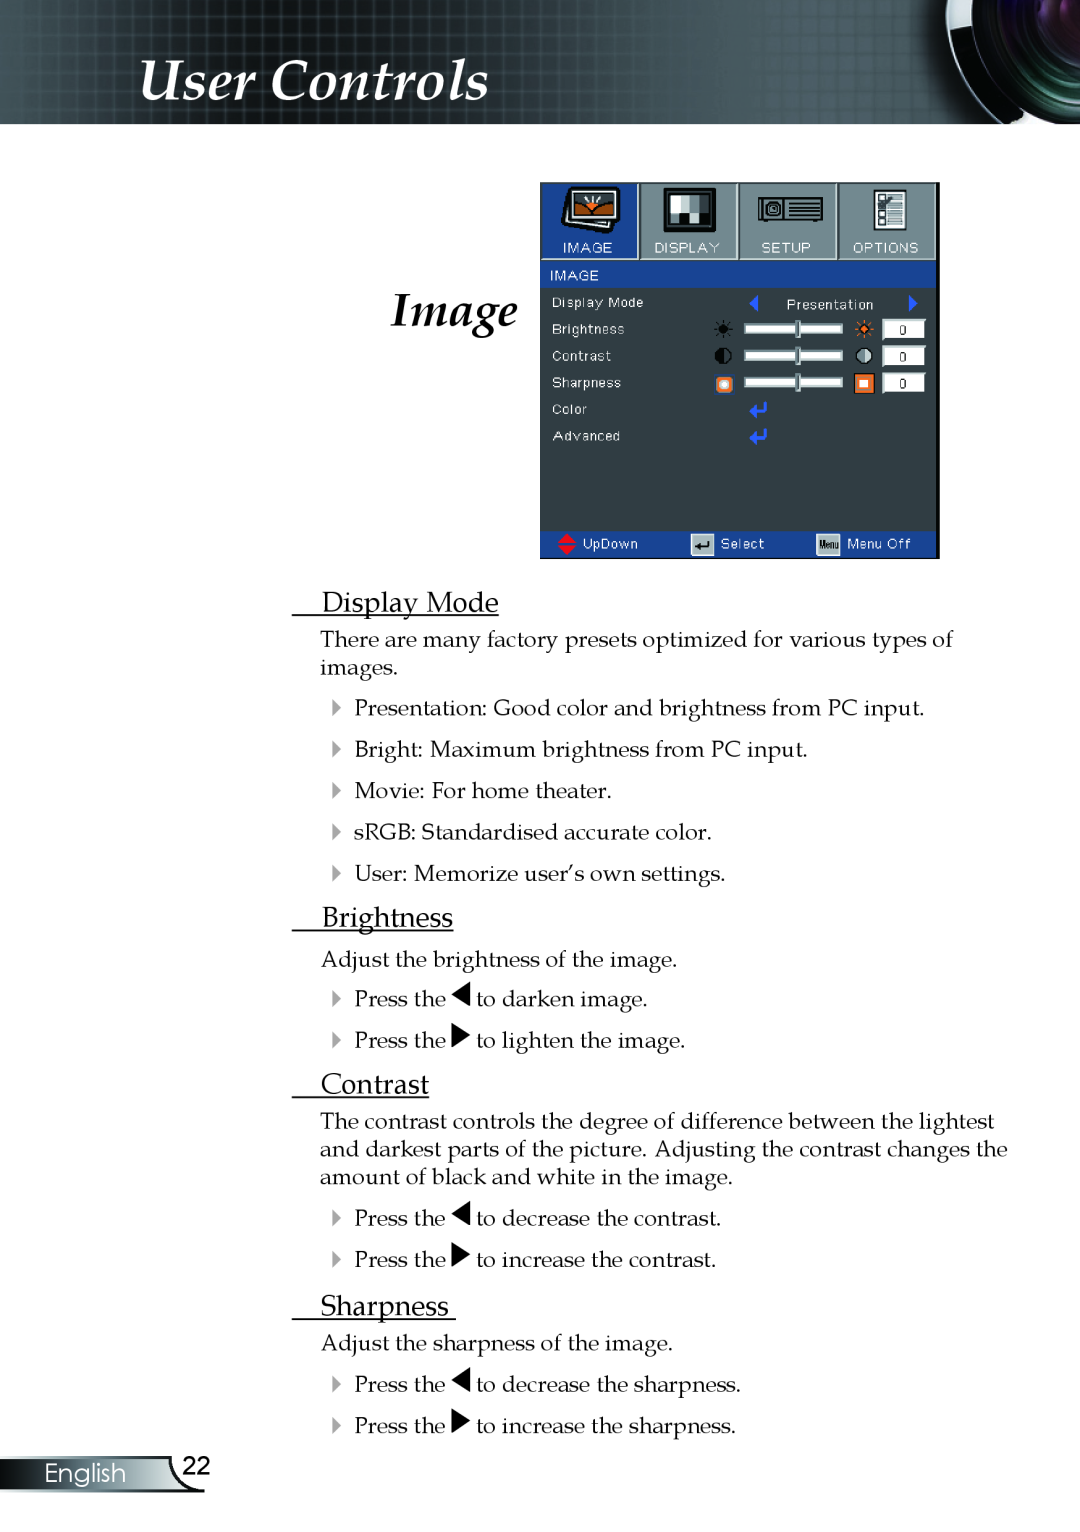 Optoma Technology TX330 manual Image, Display Mode, Brightness, Contrast, Sharpness, User Controls, English 